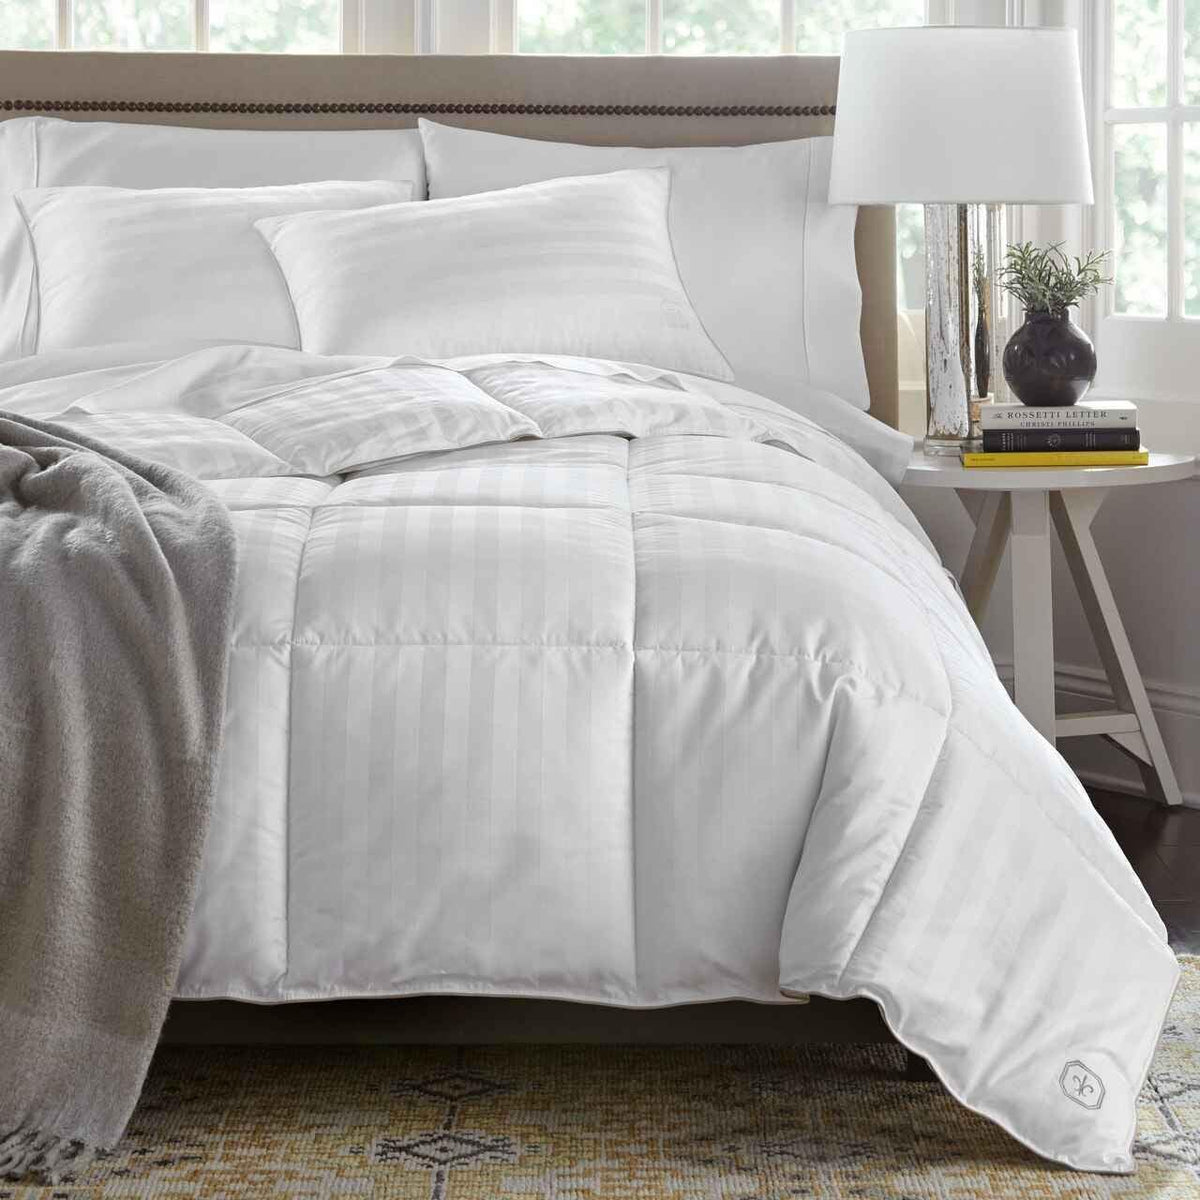 EnviroLoft Down Alternative Cooling Comforter (Hypoallergenic) - beddingbag.com